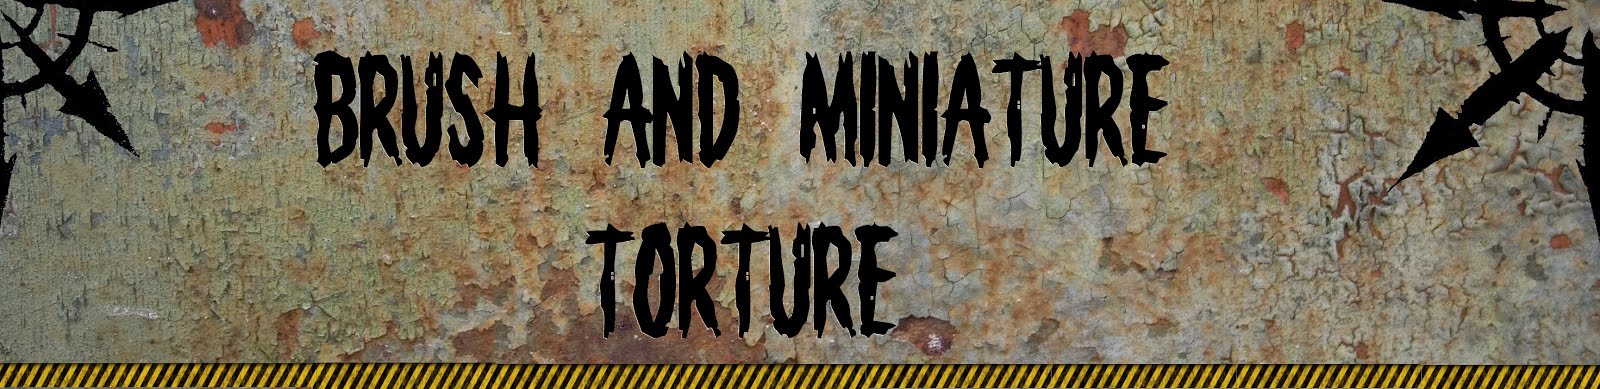 Brush And Miniature Torture